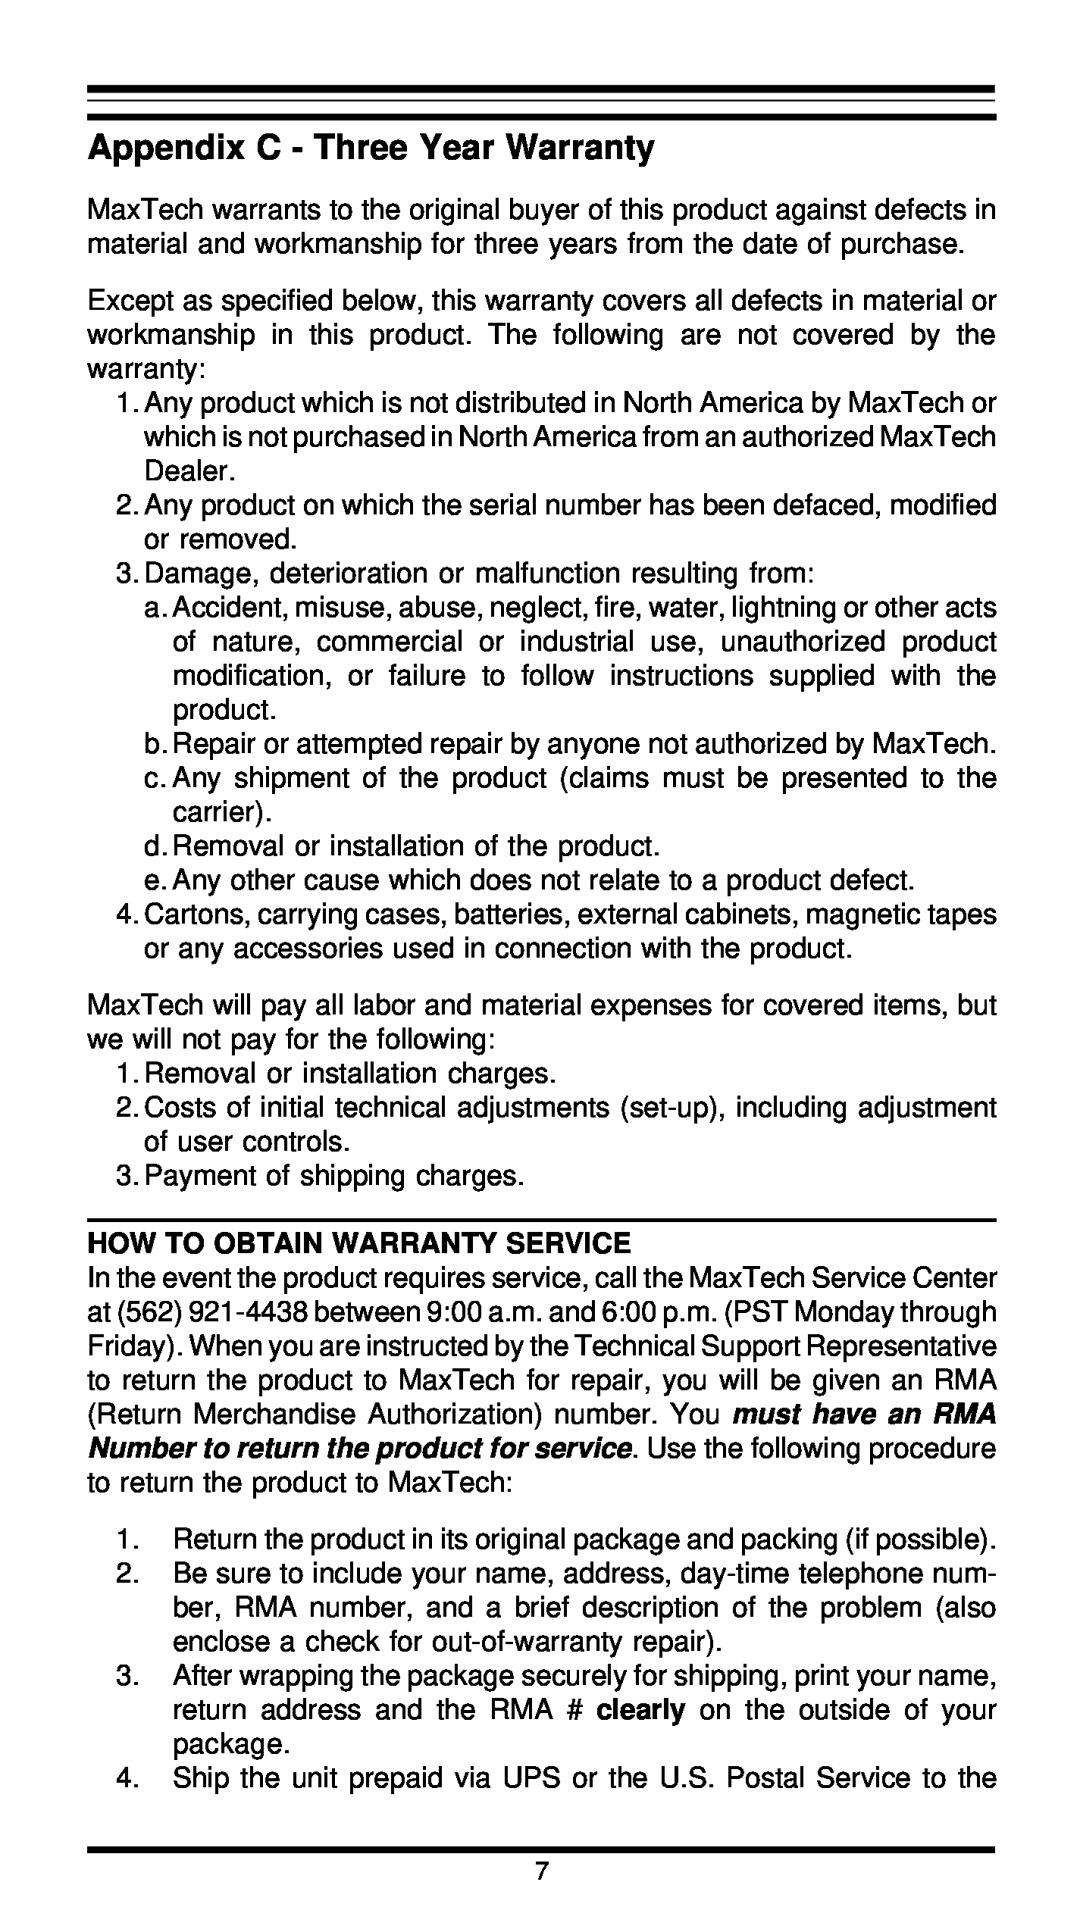 MaxTech XT4871 user manual Appendix C - Three Year Warranty, How To Obtain Warranty Service 